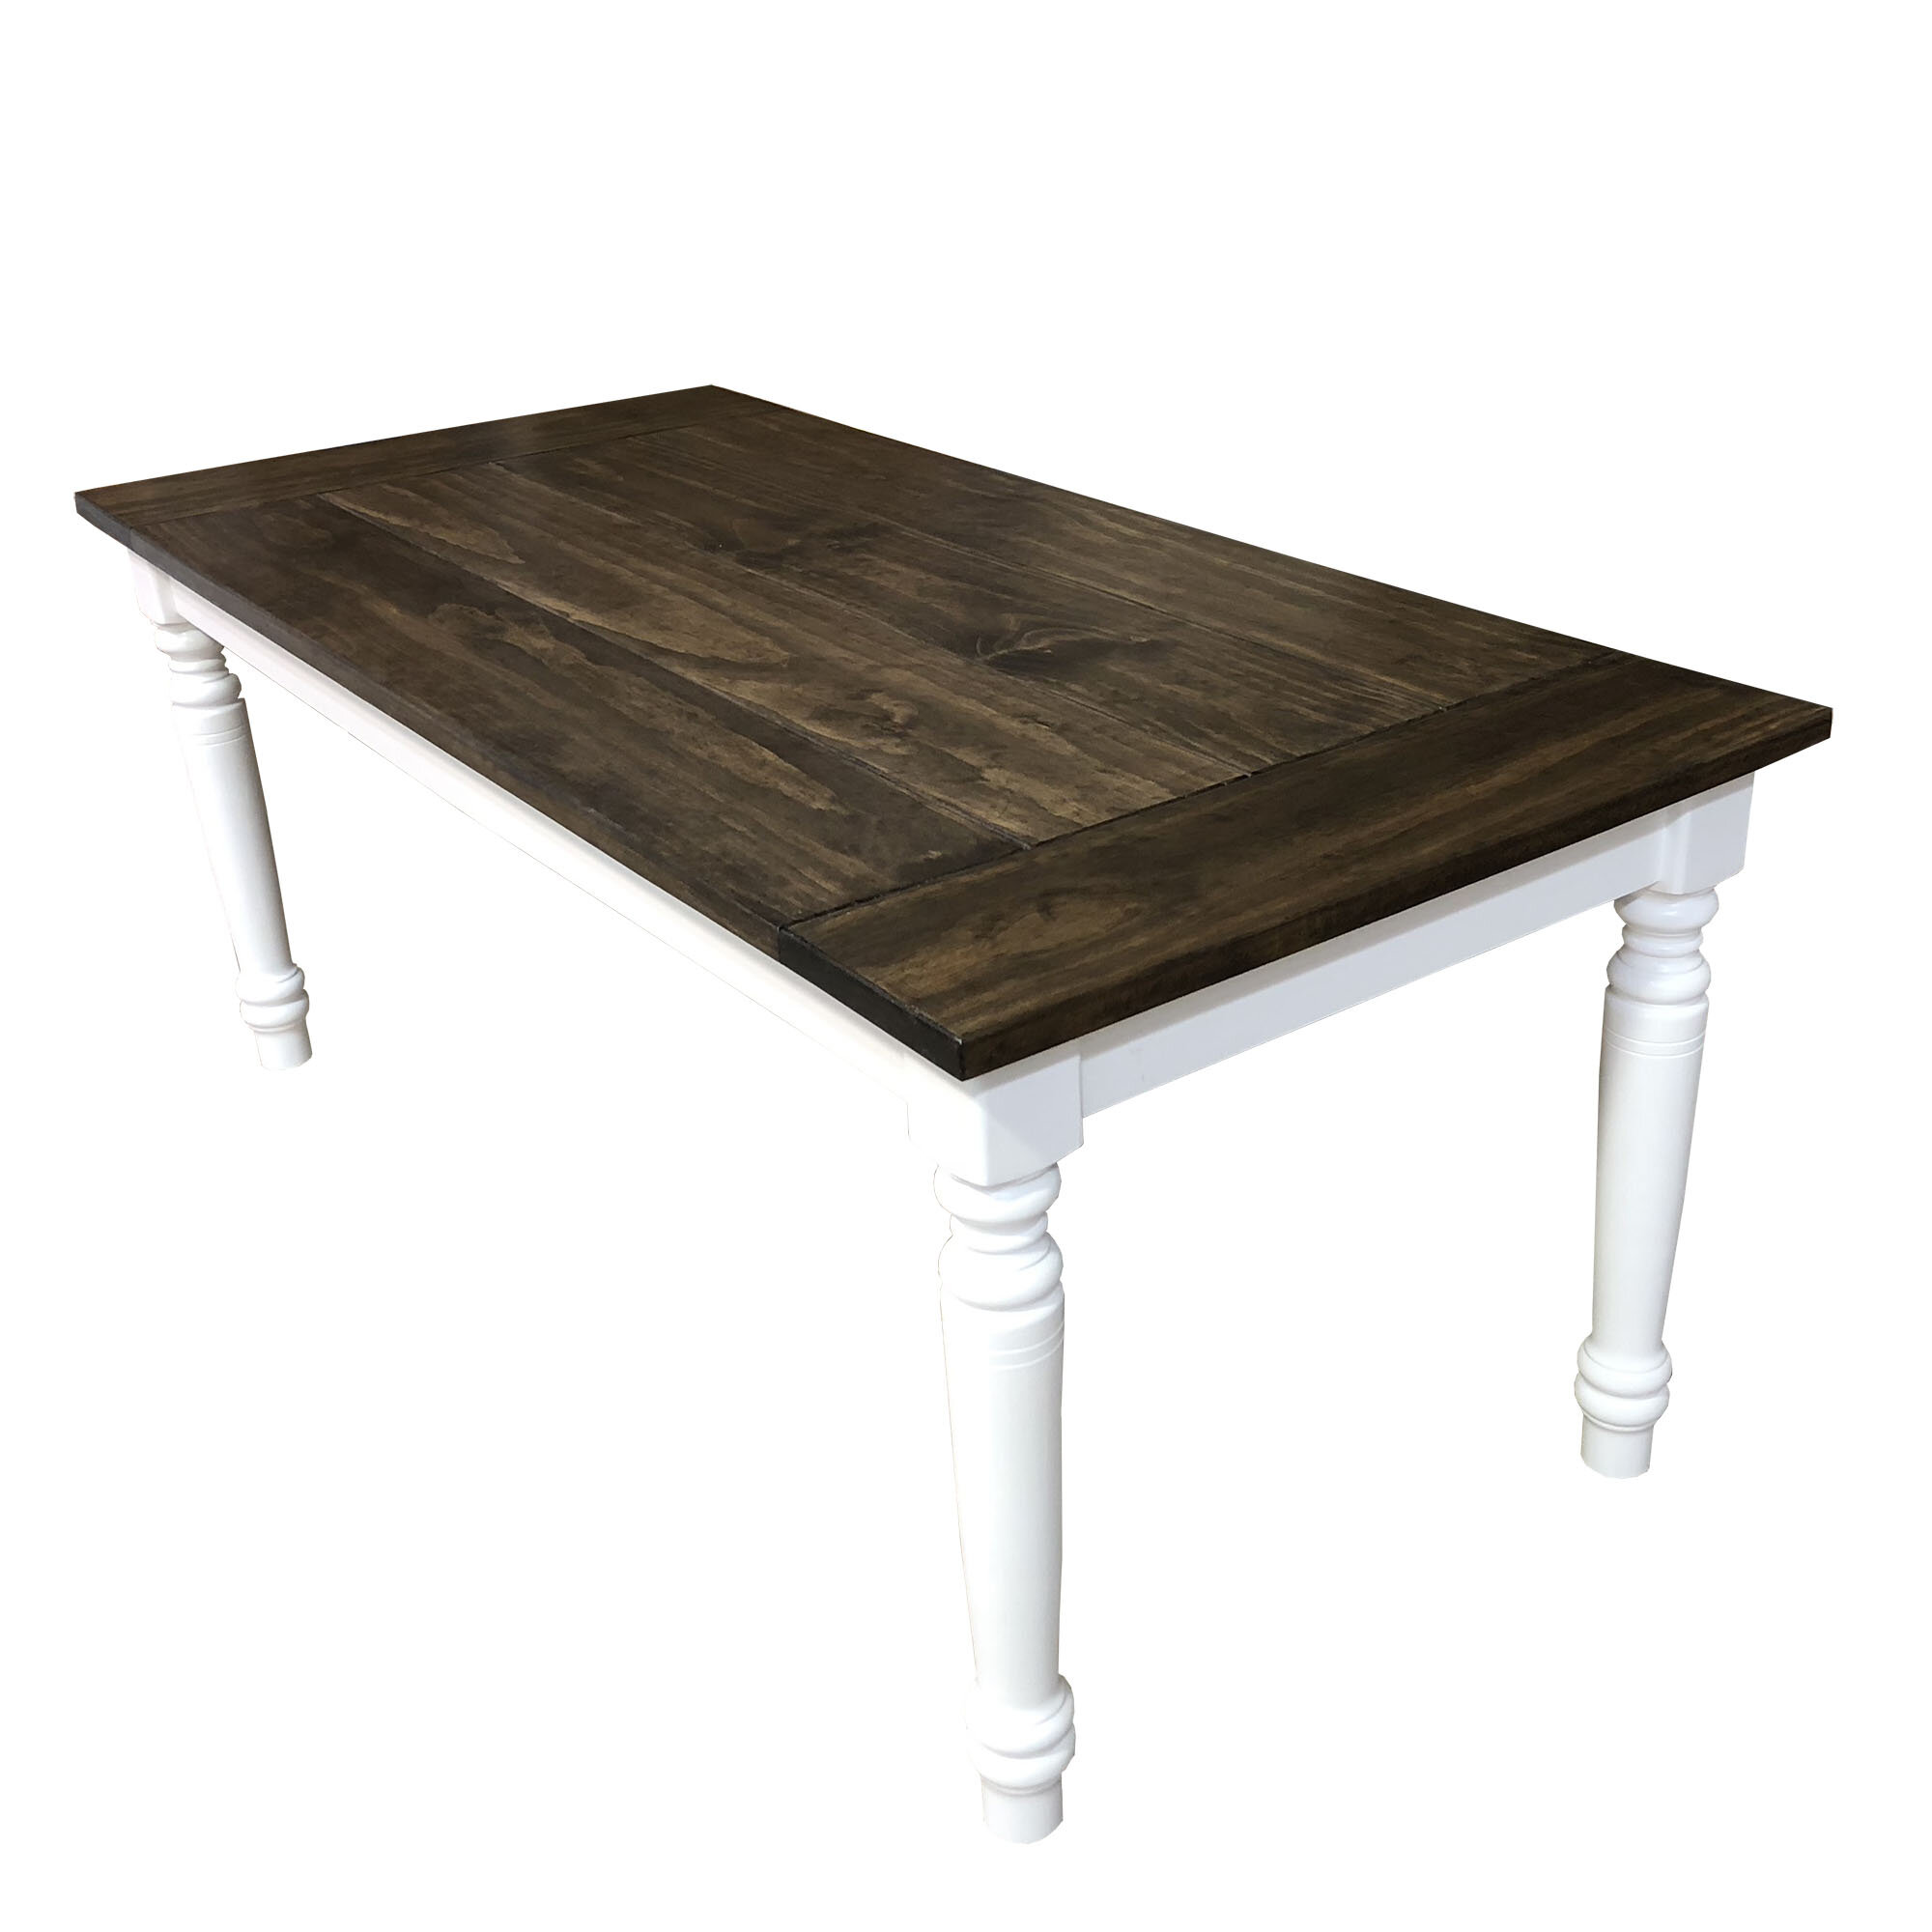 August Grove Potapchuk 34 Fir Solid Wood Dining Table Reviews Wayfair